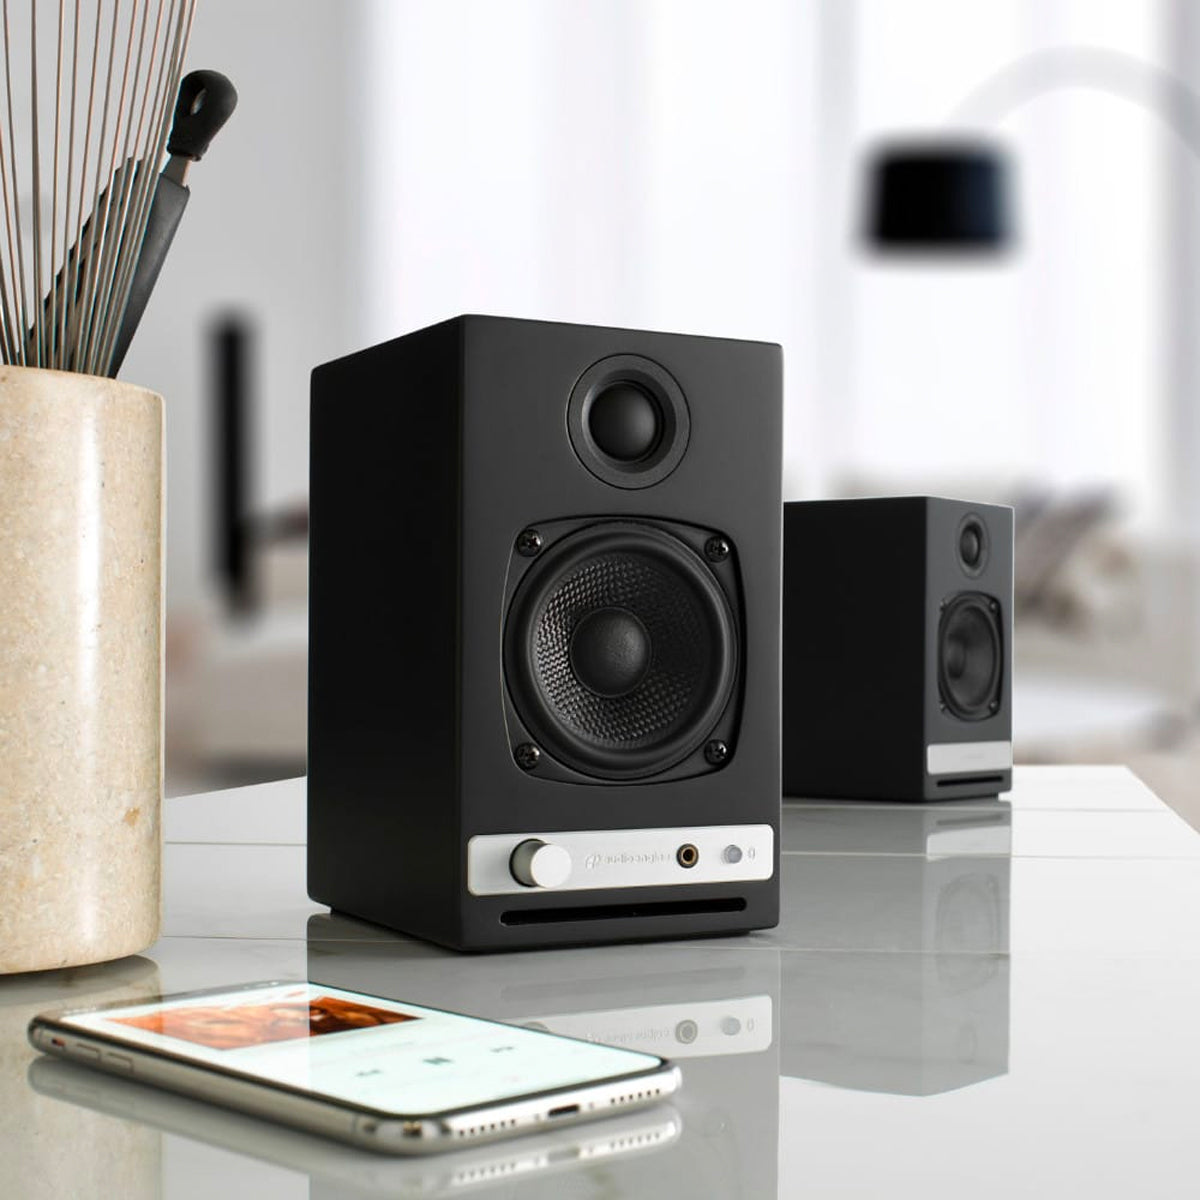 Audioengine HD3 Active Wireless Speakers - Satin Black - The Audio Experts